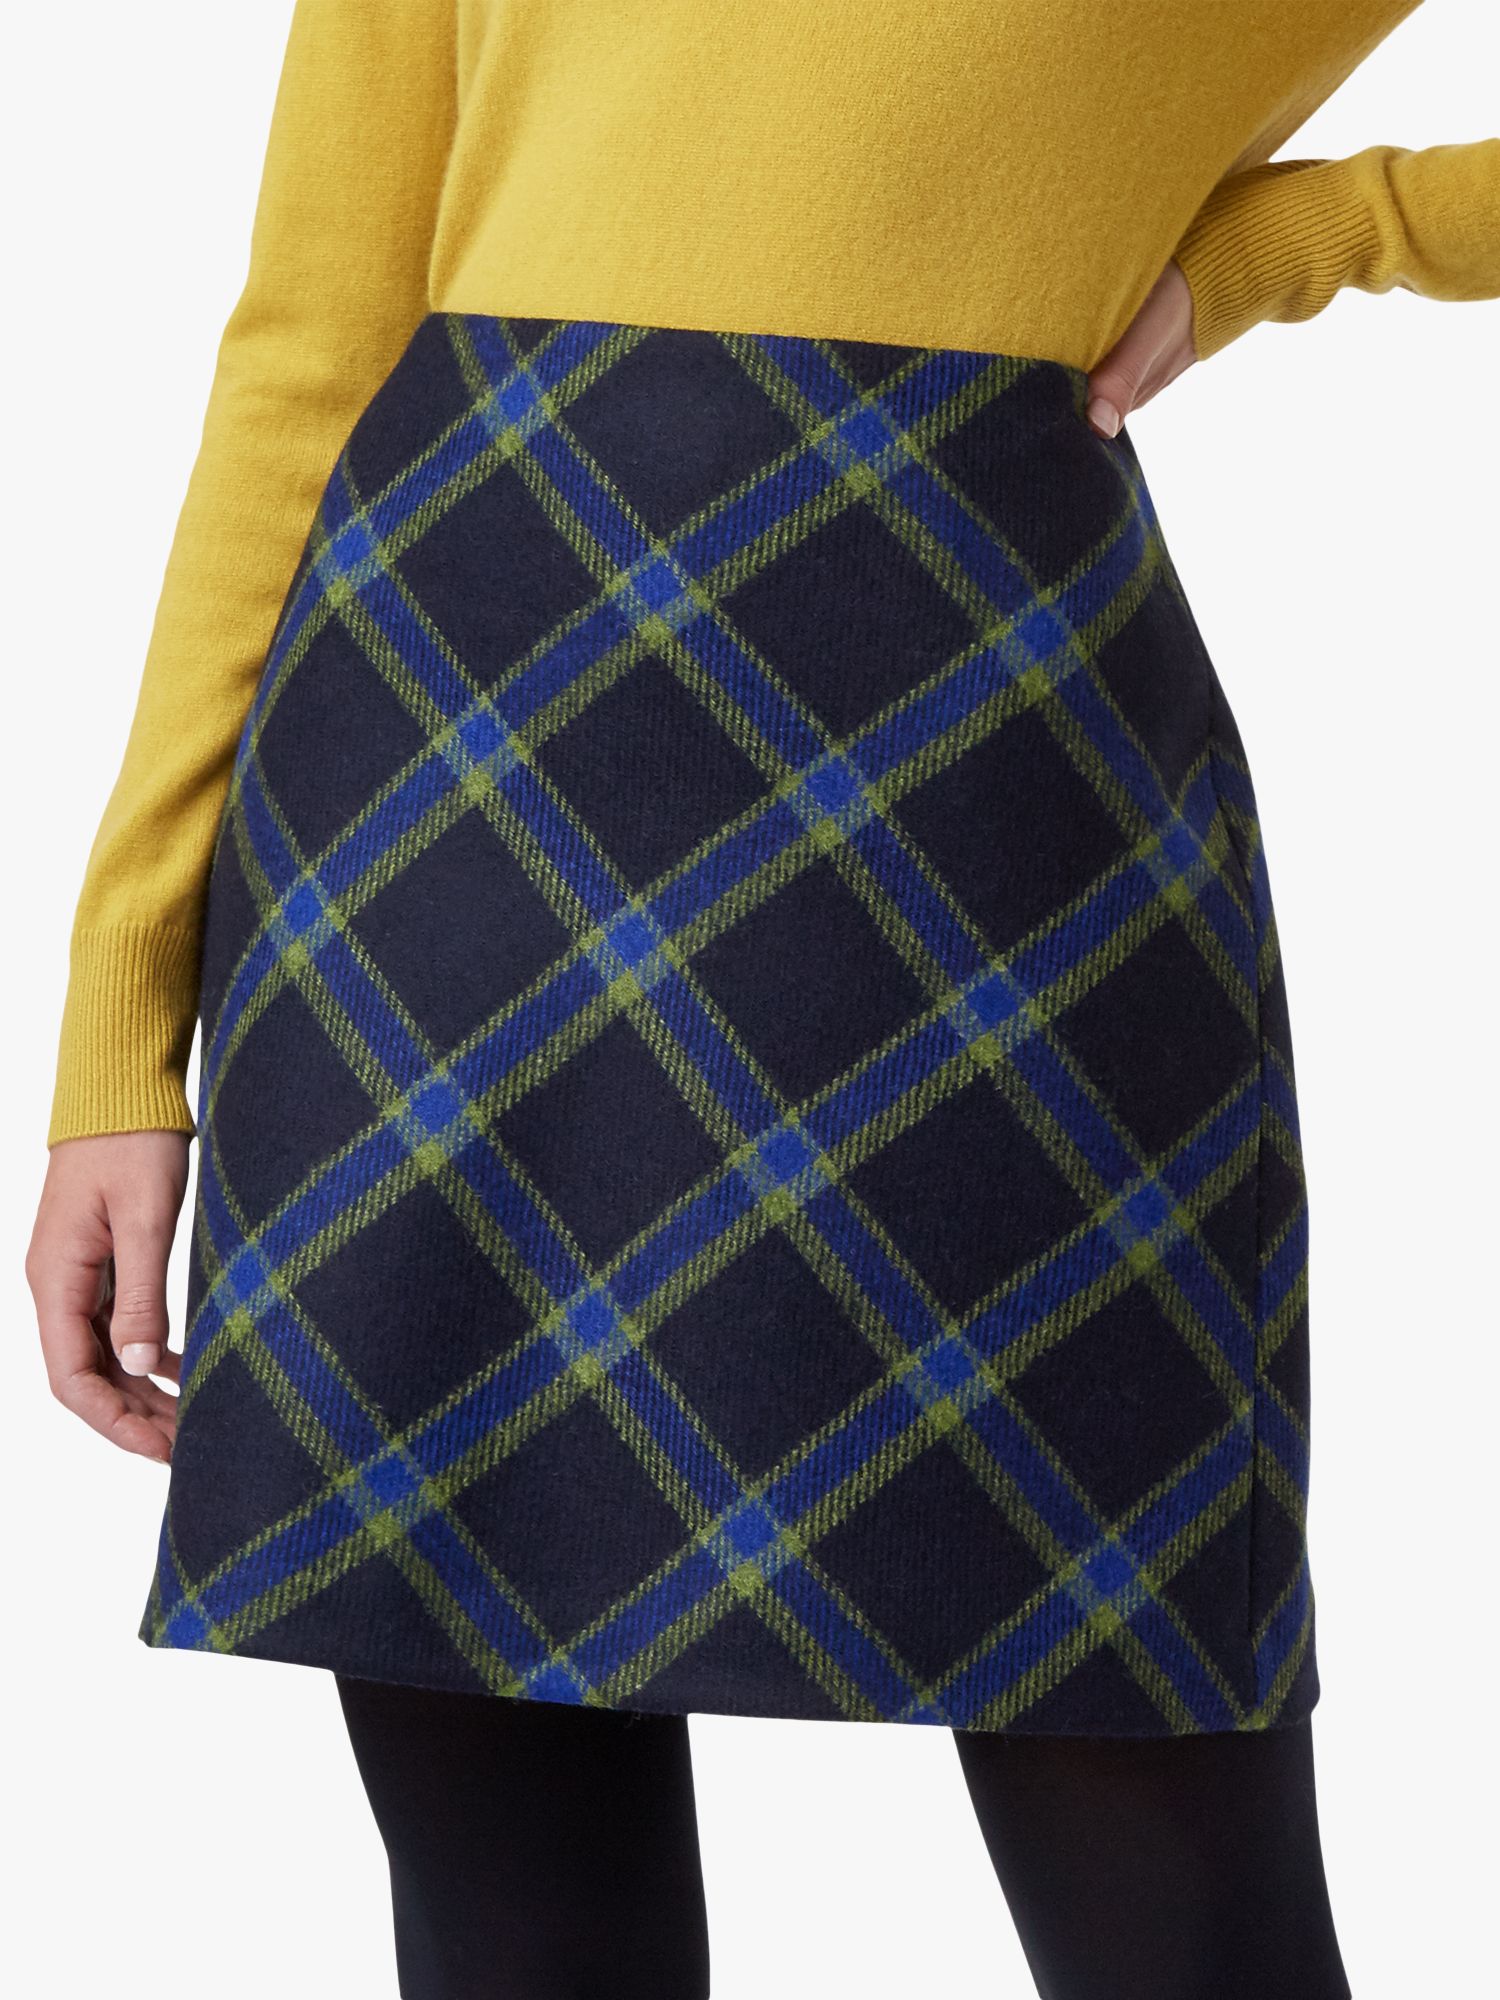 Hobbs Elea Check Wool Mini Skirt, Navy/Green at John Lewis & Partners